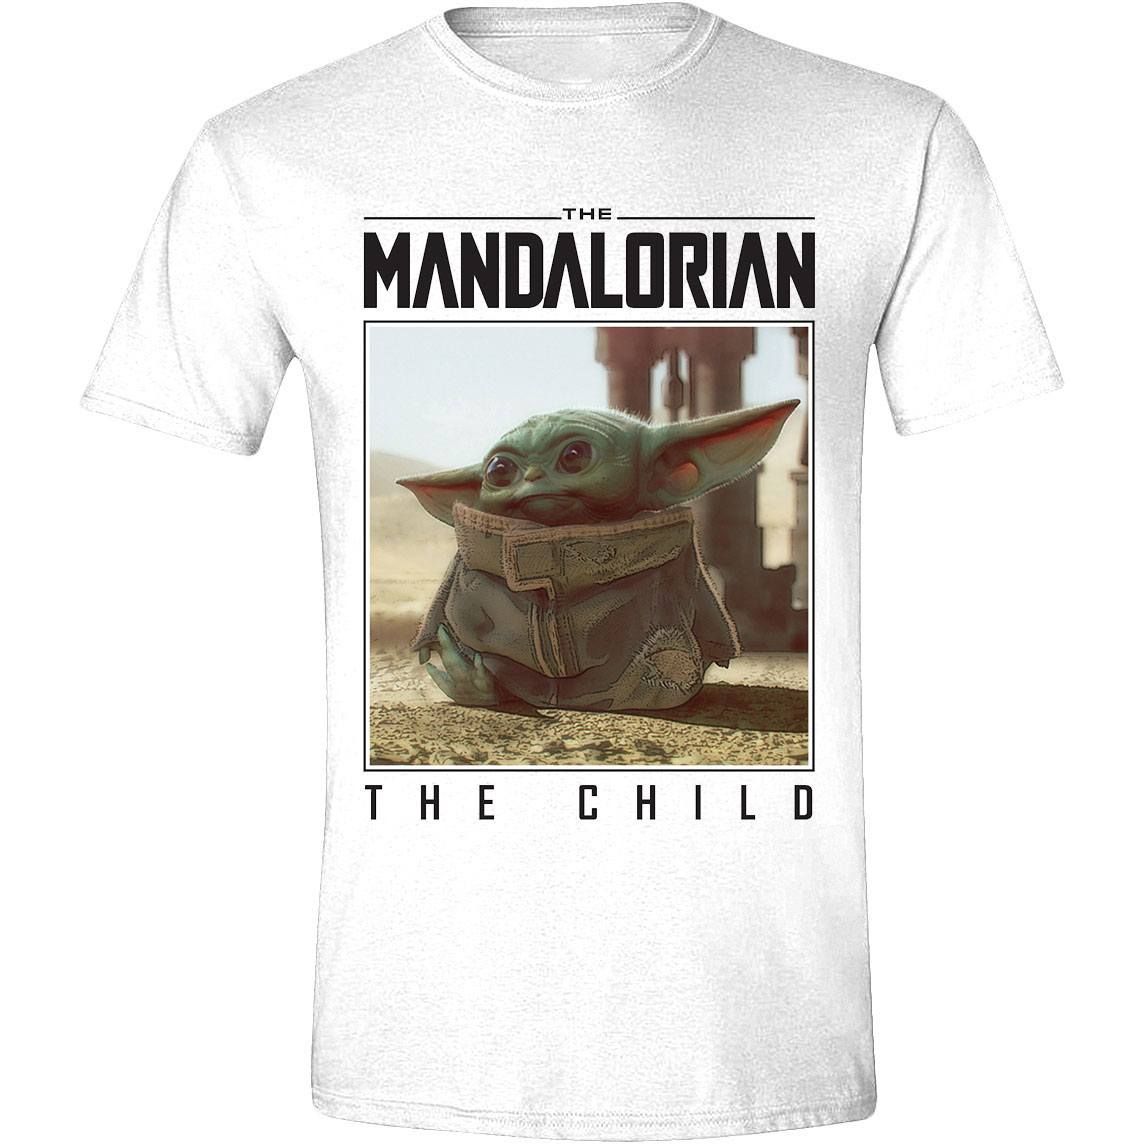 Star Wars The Mandalorian T-Shirt The Child Photo Size XXL PCMerch